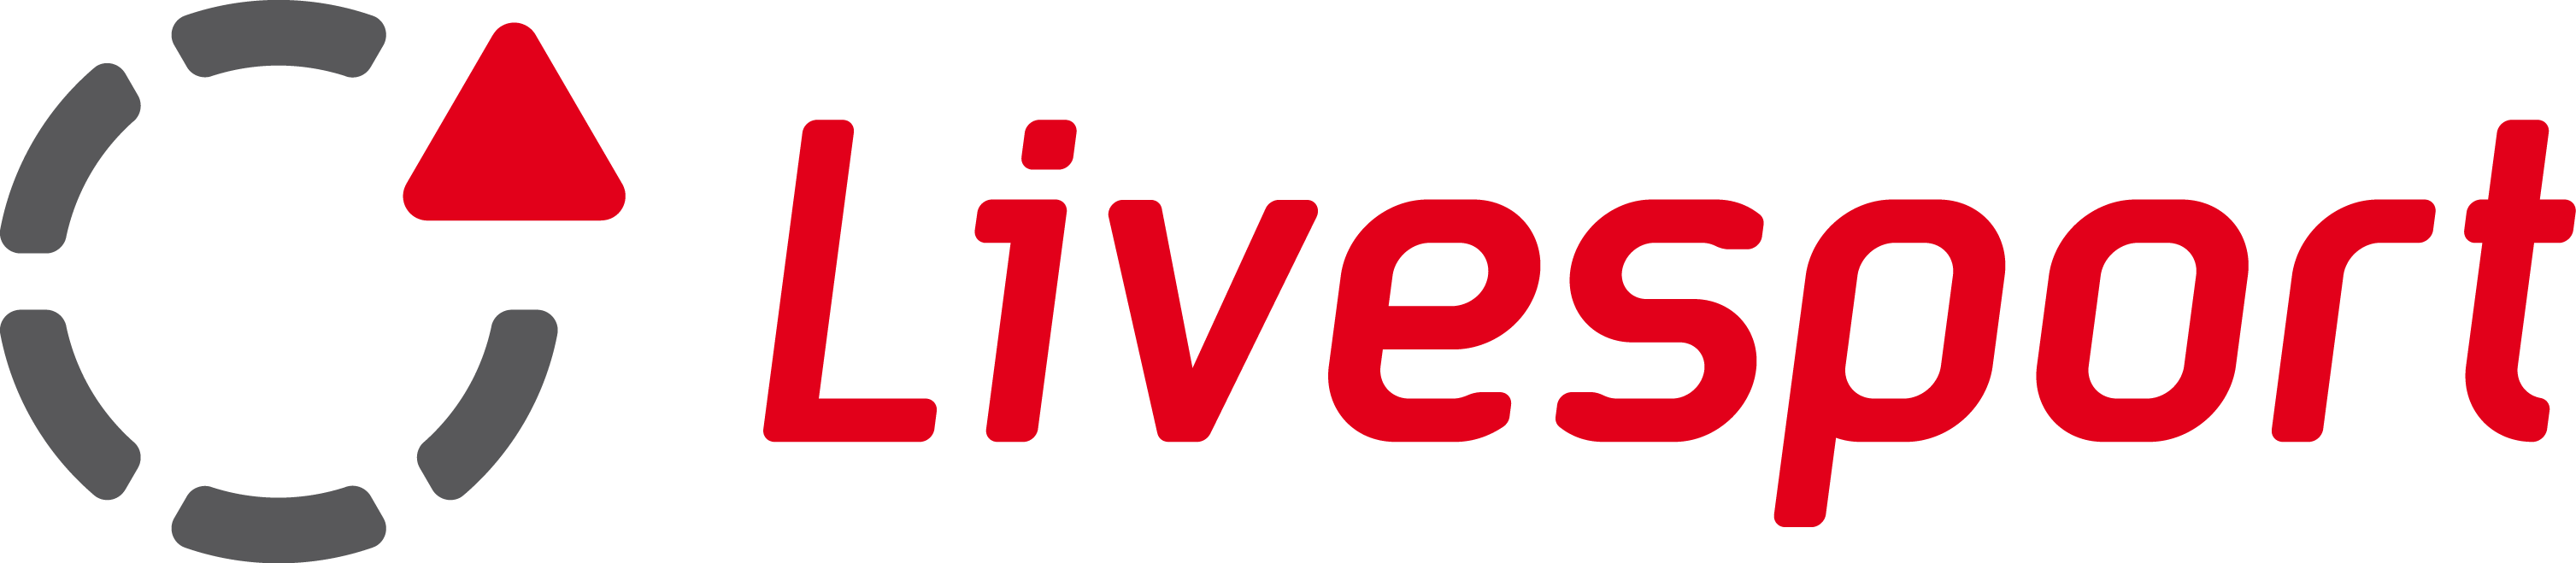 Livesport ws. LIVESPORT. Live Sport. LIVESPORT logo. Livesports АПК лого.